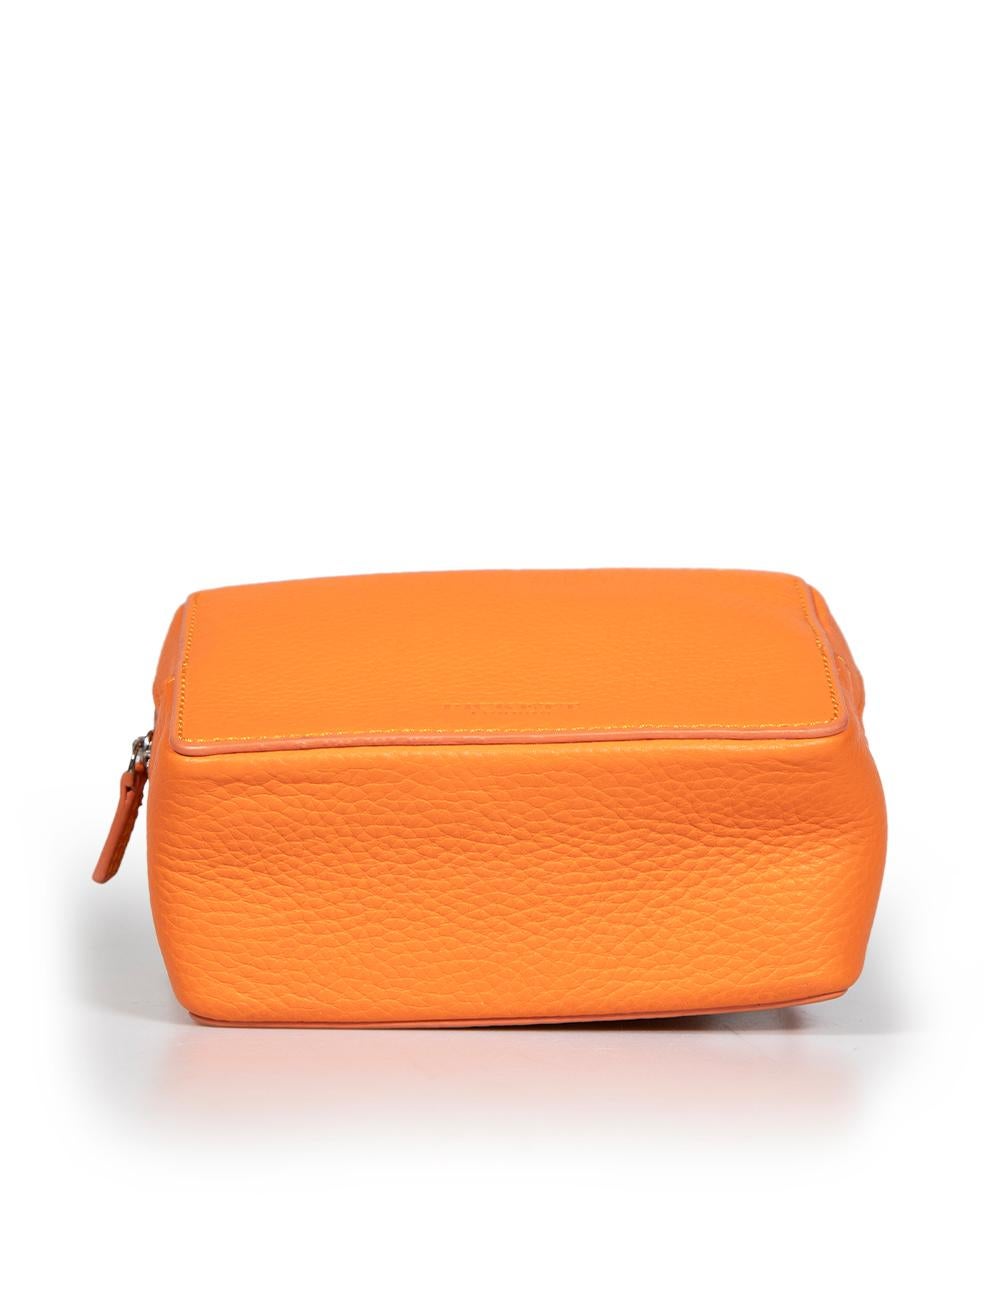 Women's Pickett Orange Leather Convertible Bag For Sale